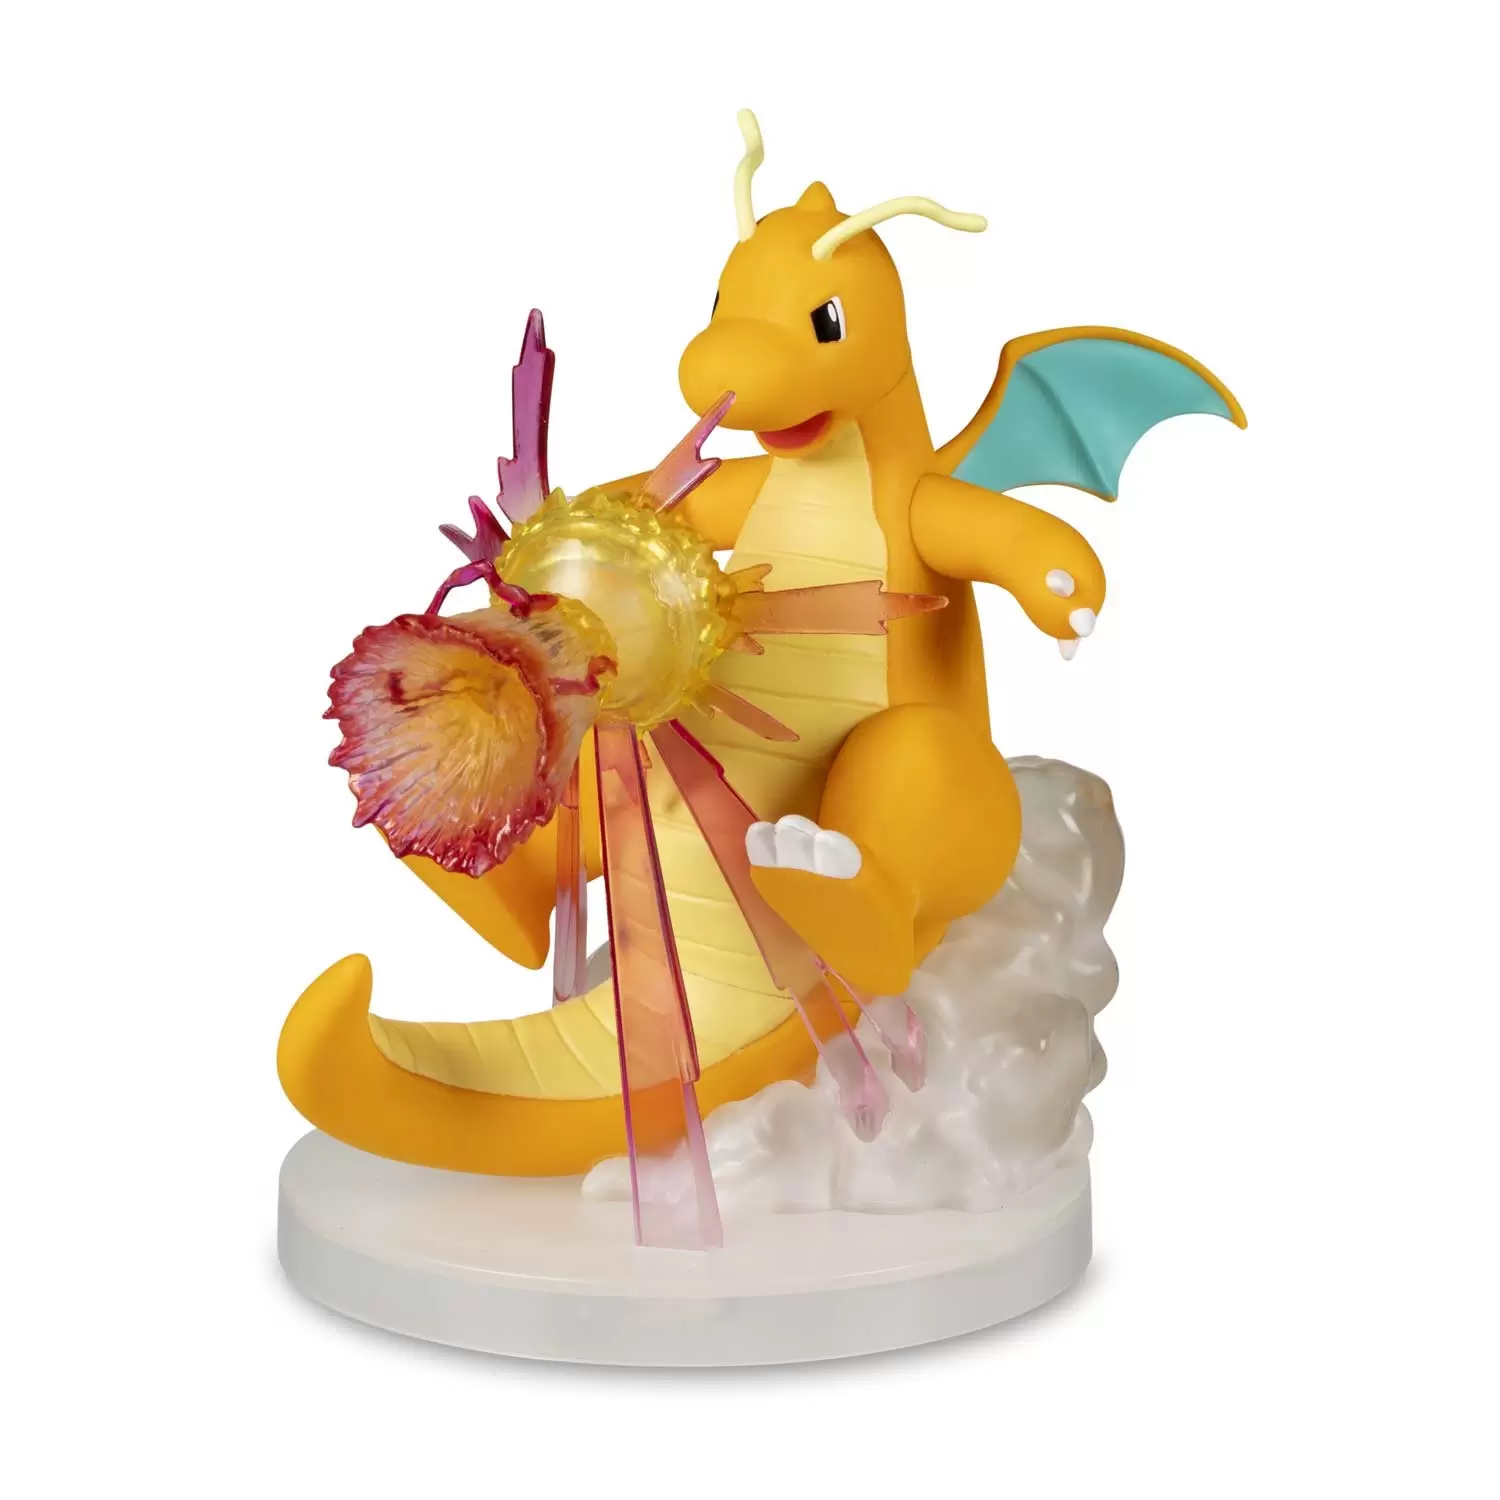 Pokémon Gallery Figures - Dragonite: Hyper Beam